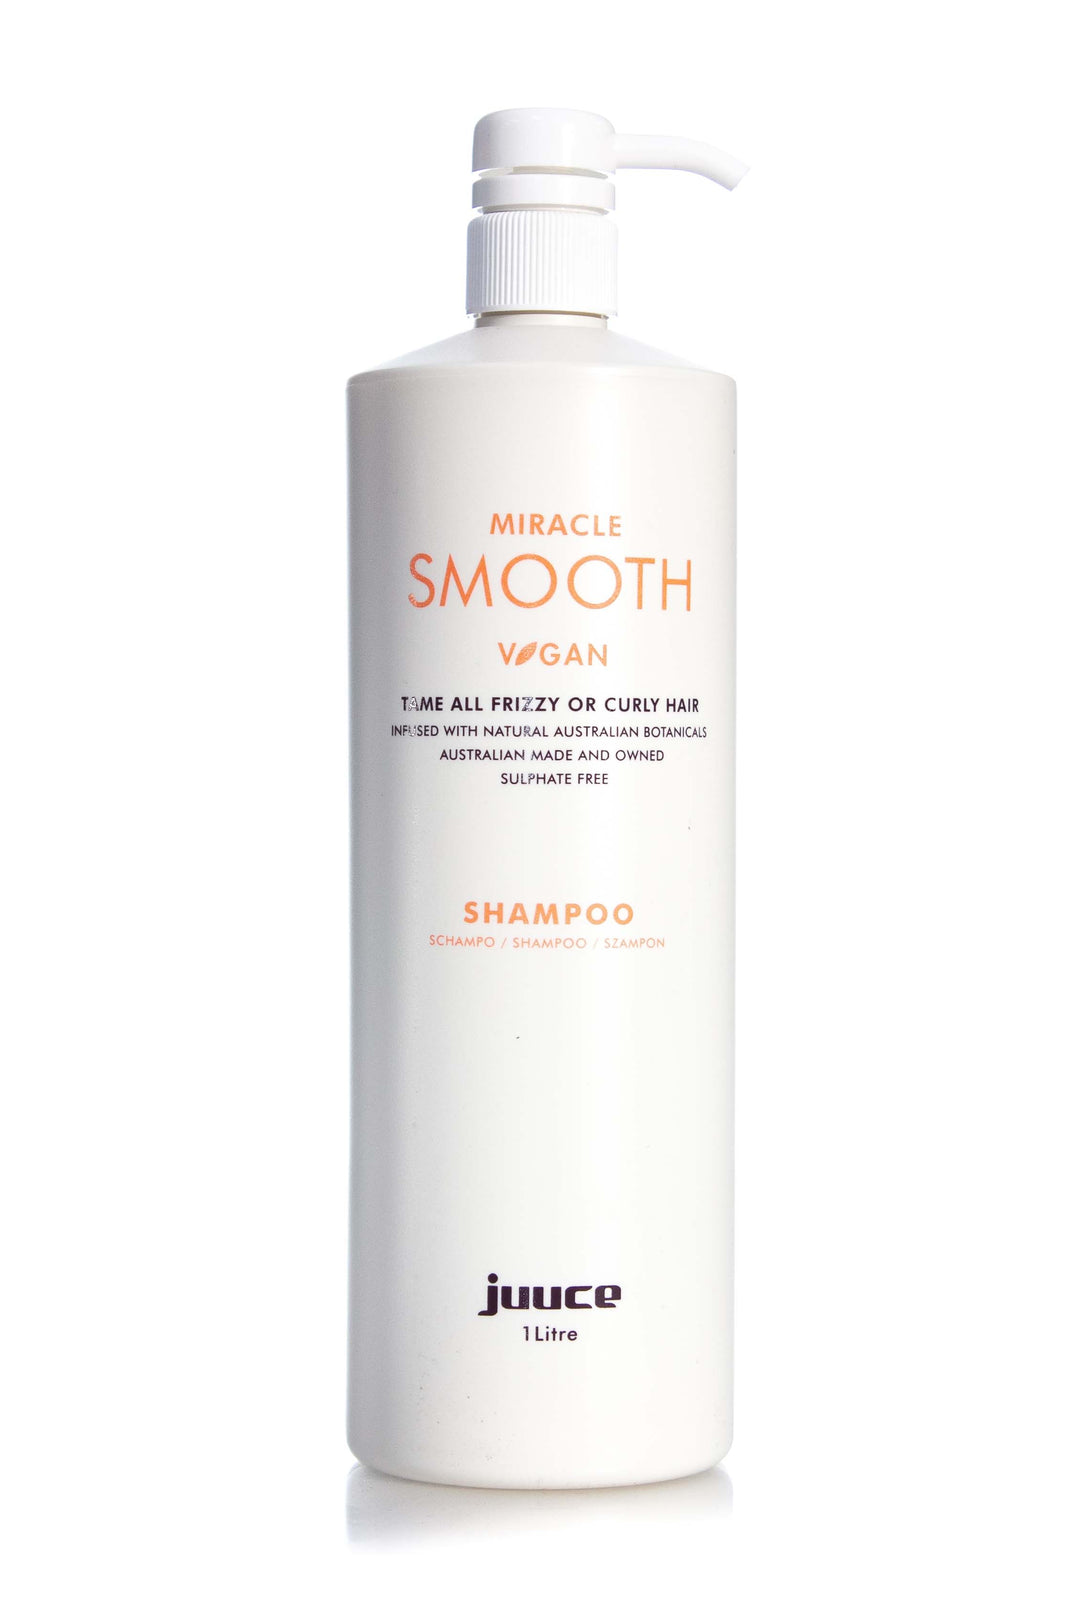 Juuce Miracle Smooth Shampoo